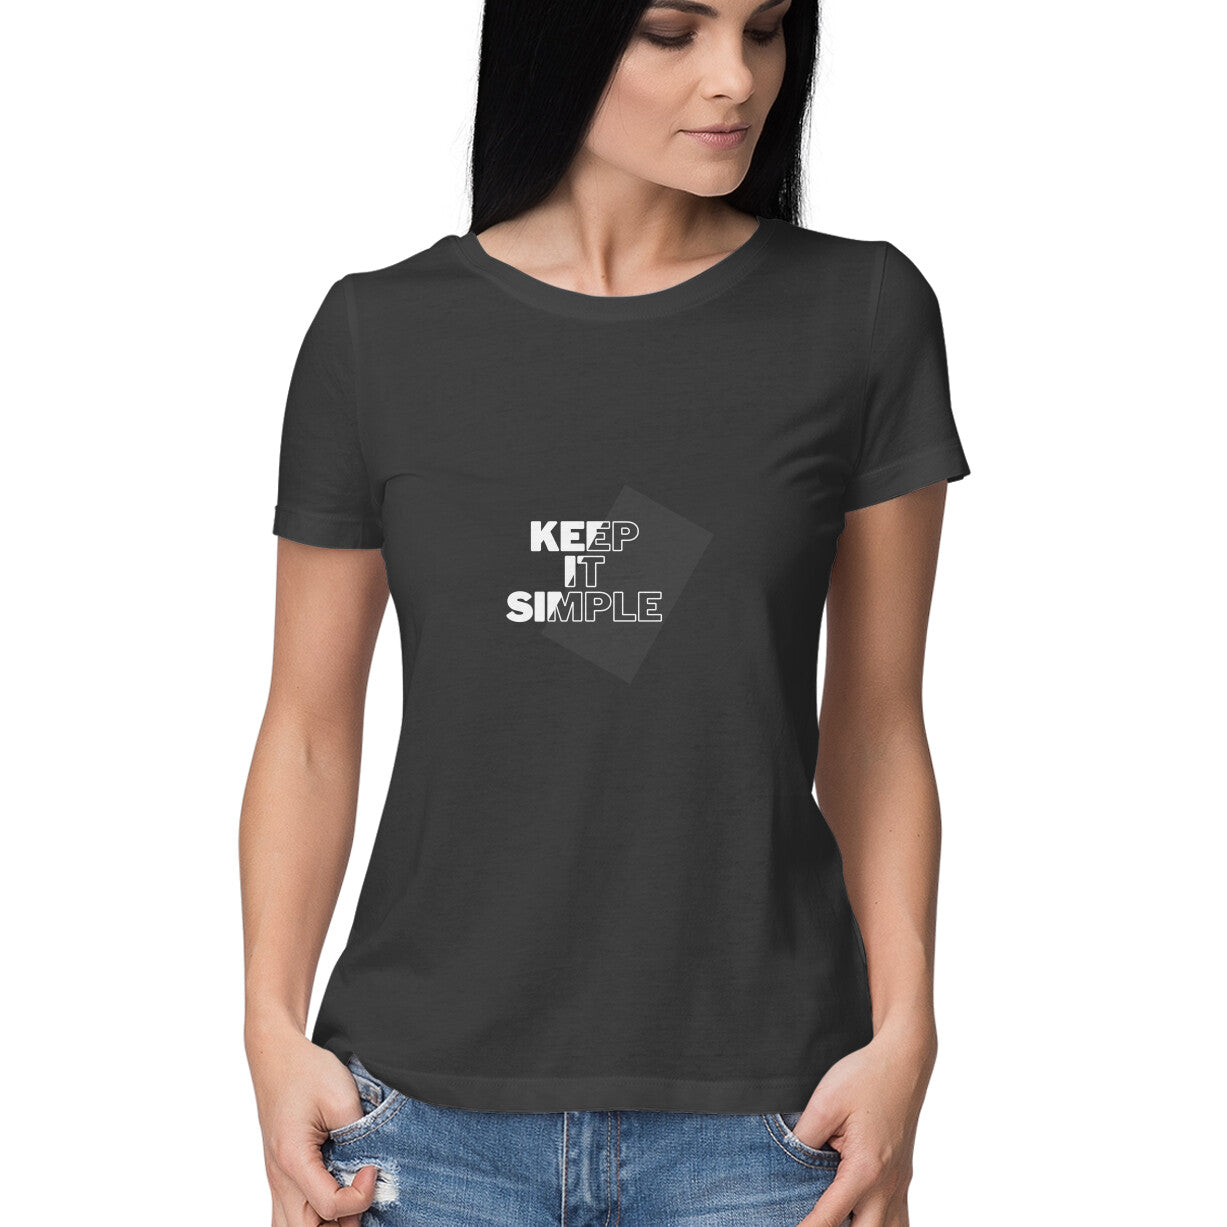 Keep it simple - Slogan T-shirt  Women